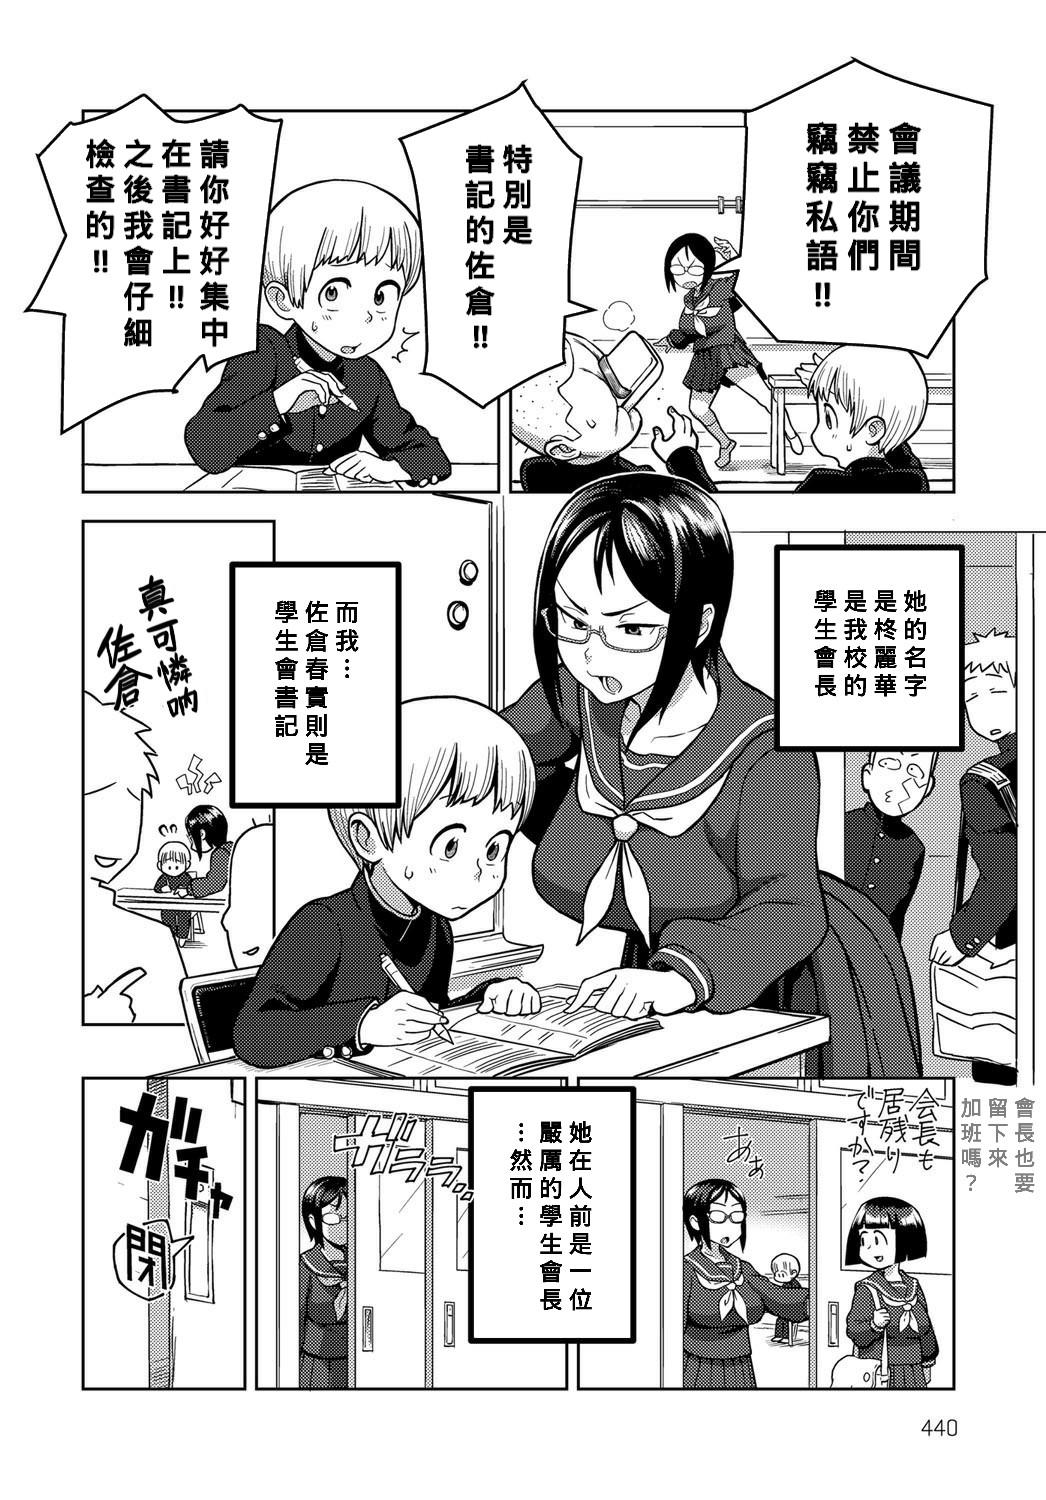 Coroa Houkago Meeting Blows - Page 2